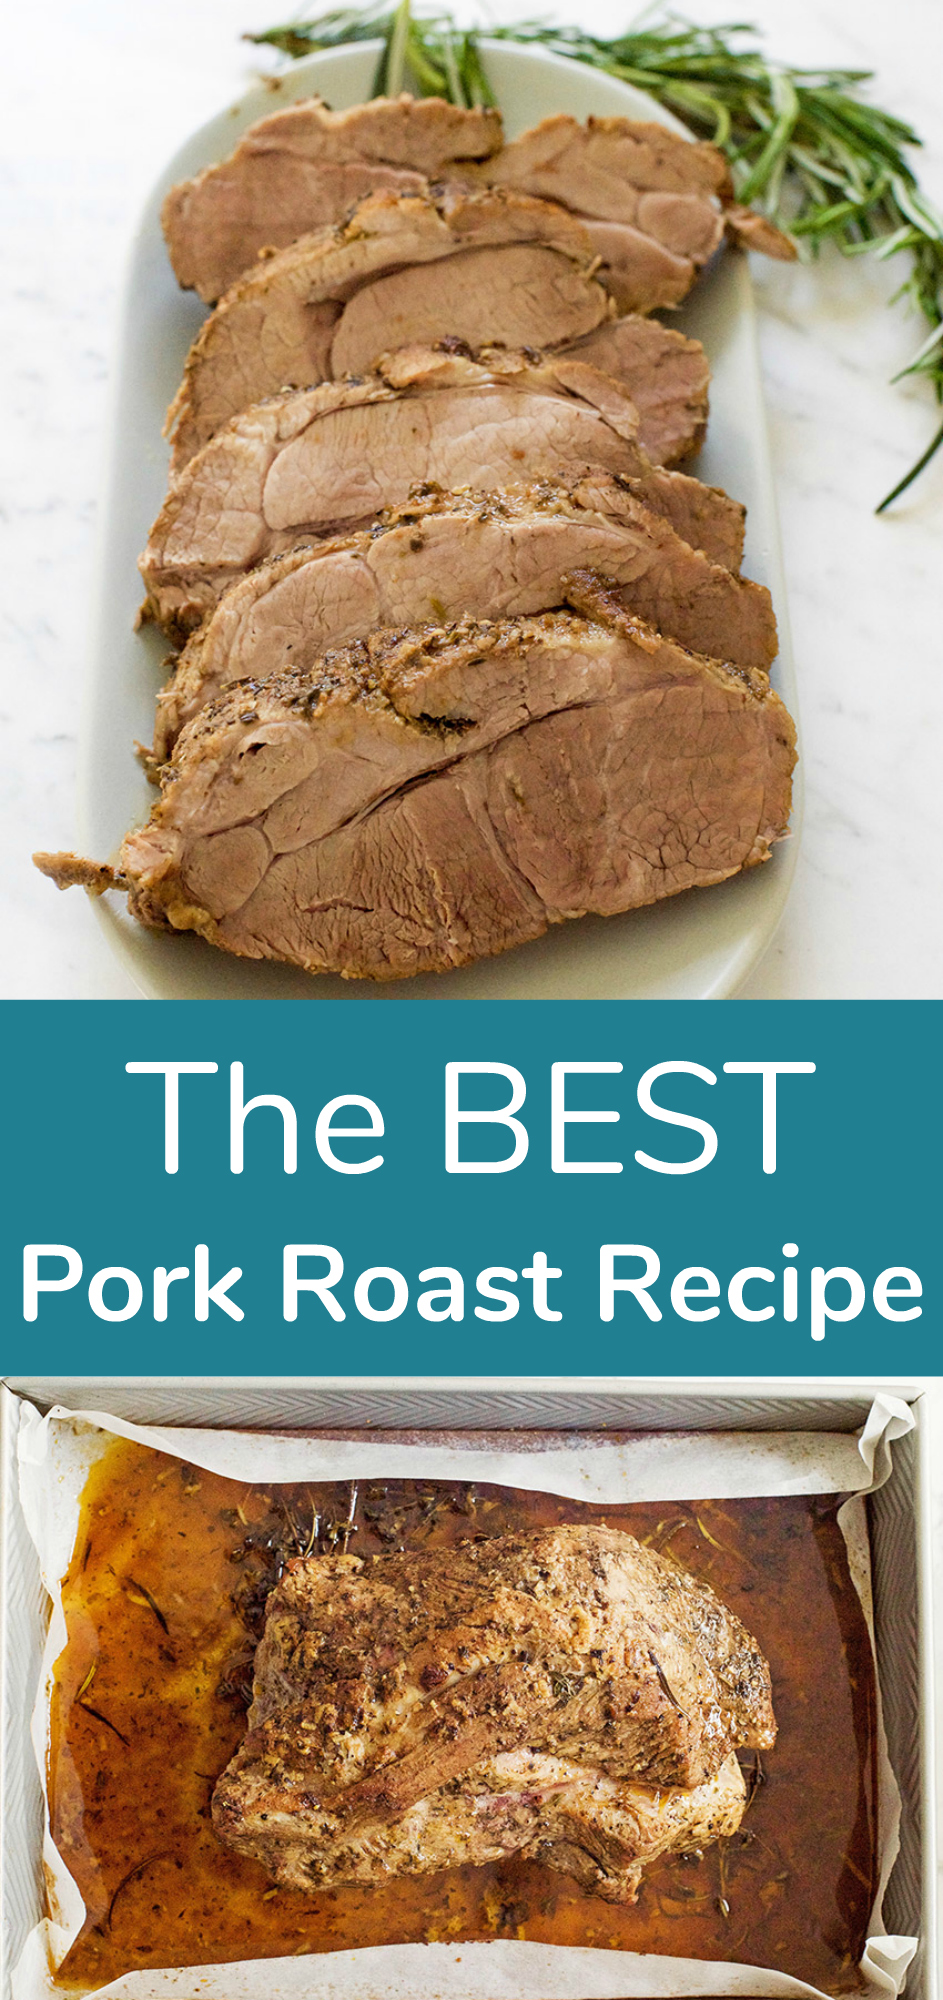 The Best Pork Roast Recipe